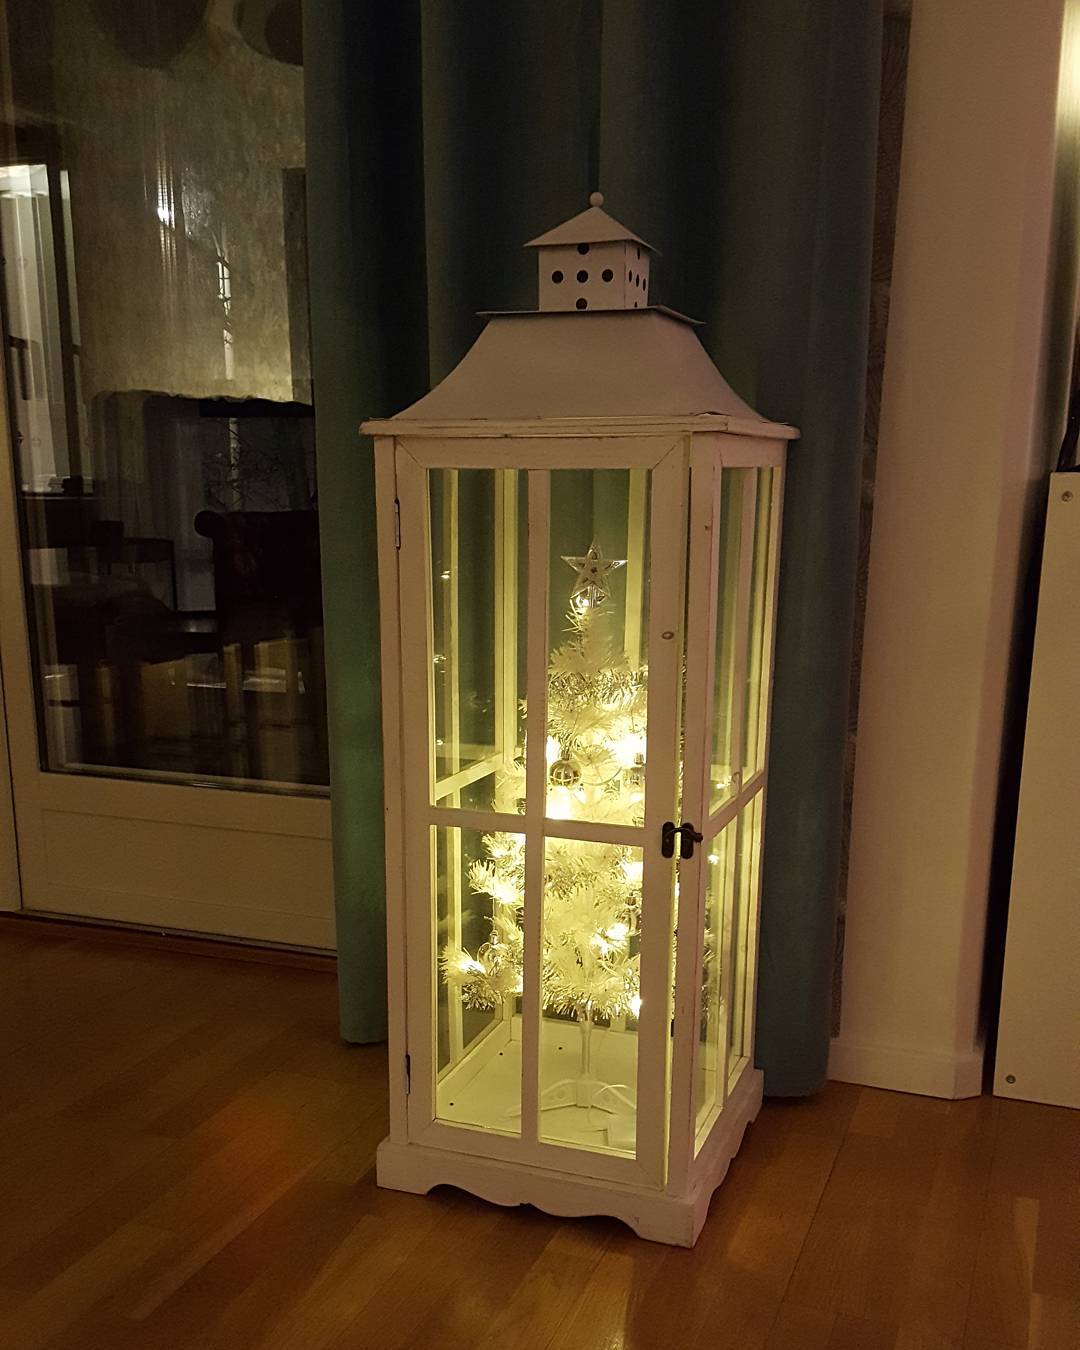 Christmas tree inside a lantern